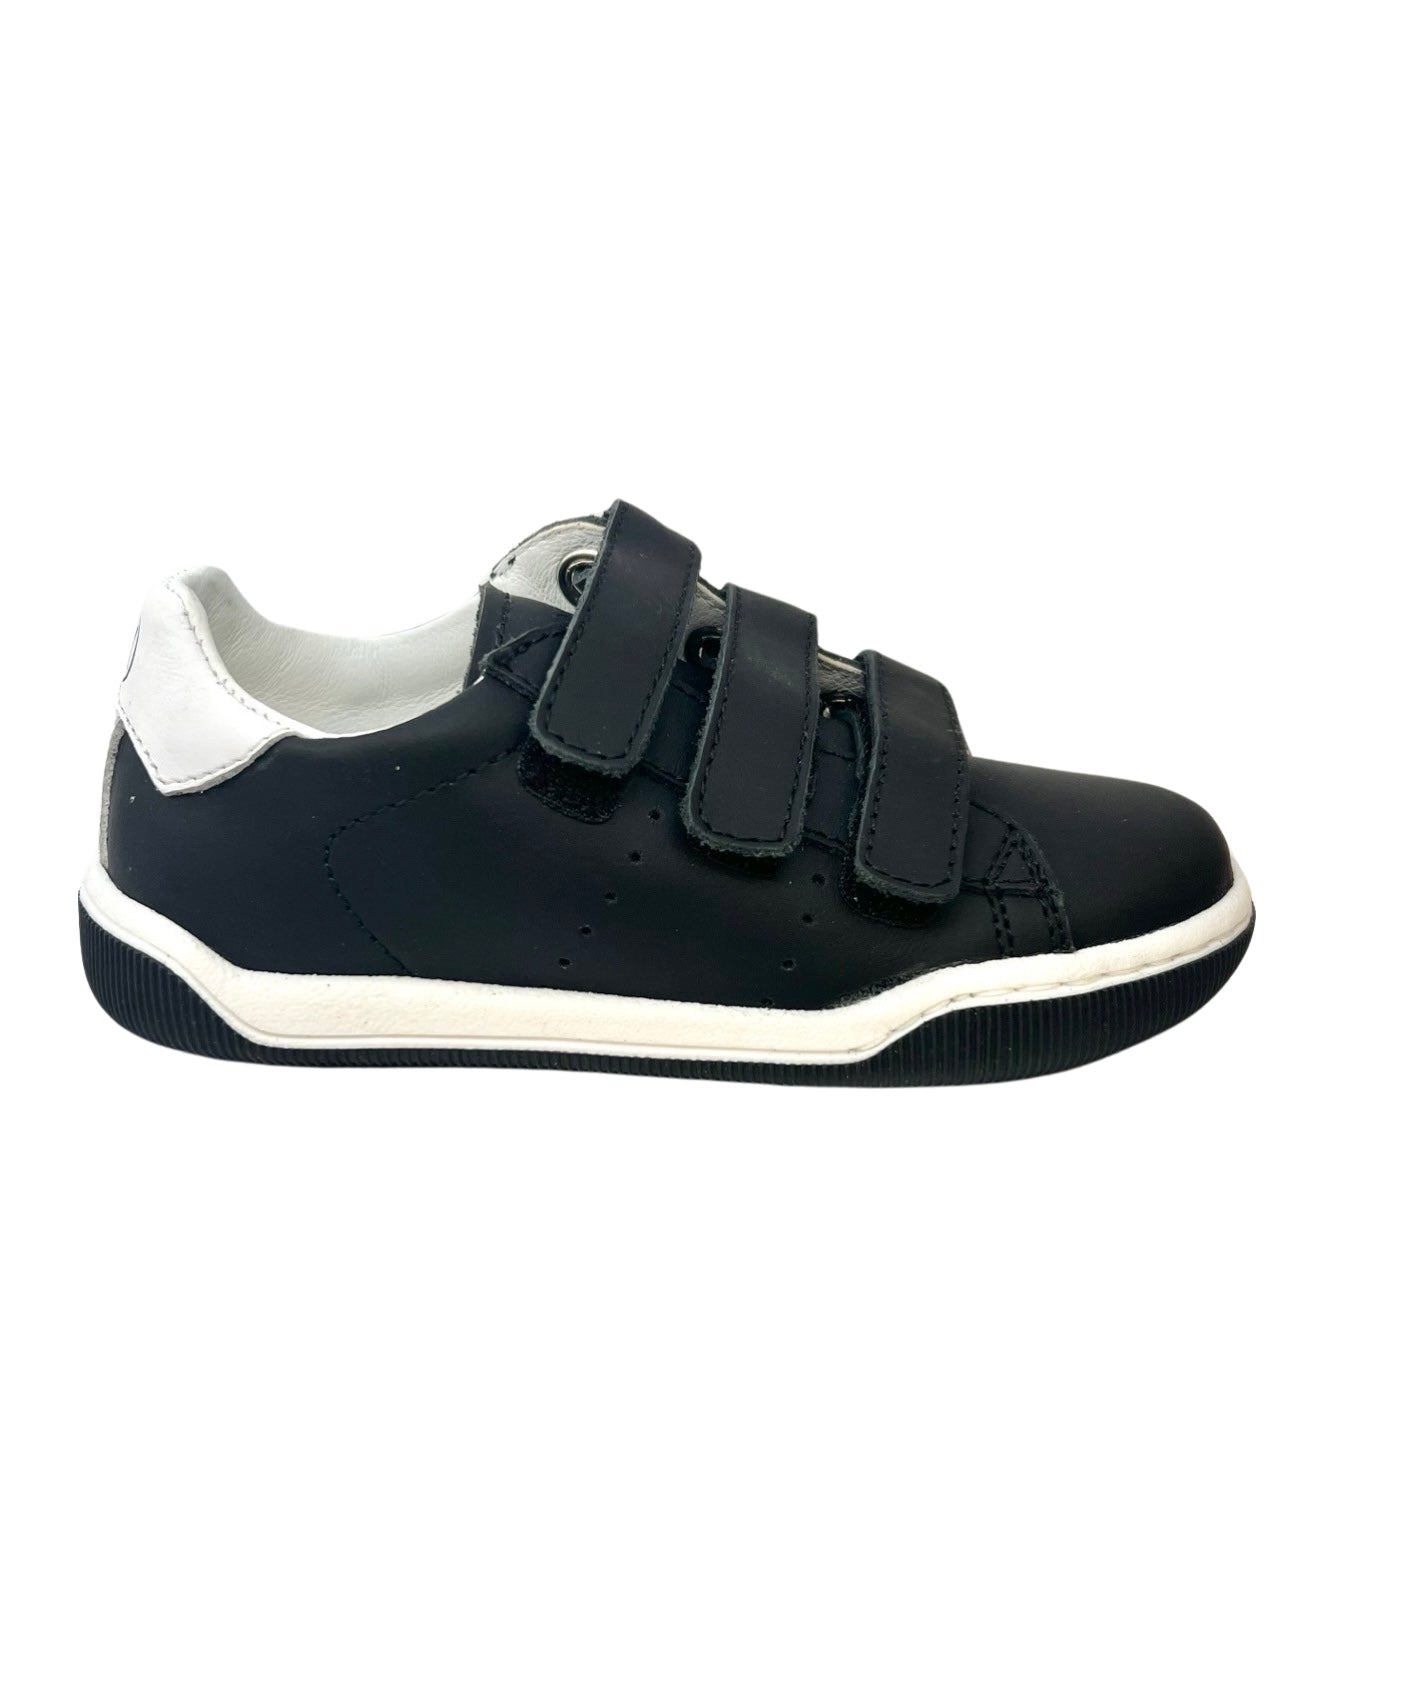 Naturino Black Triple Velcro Sneaker - Cliff